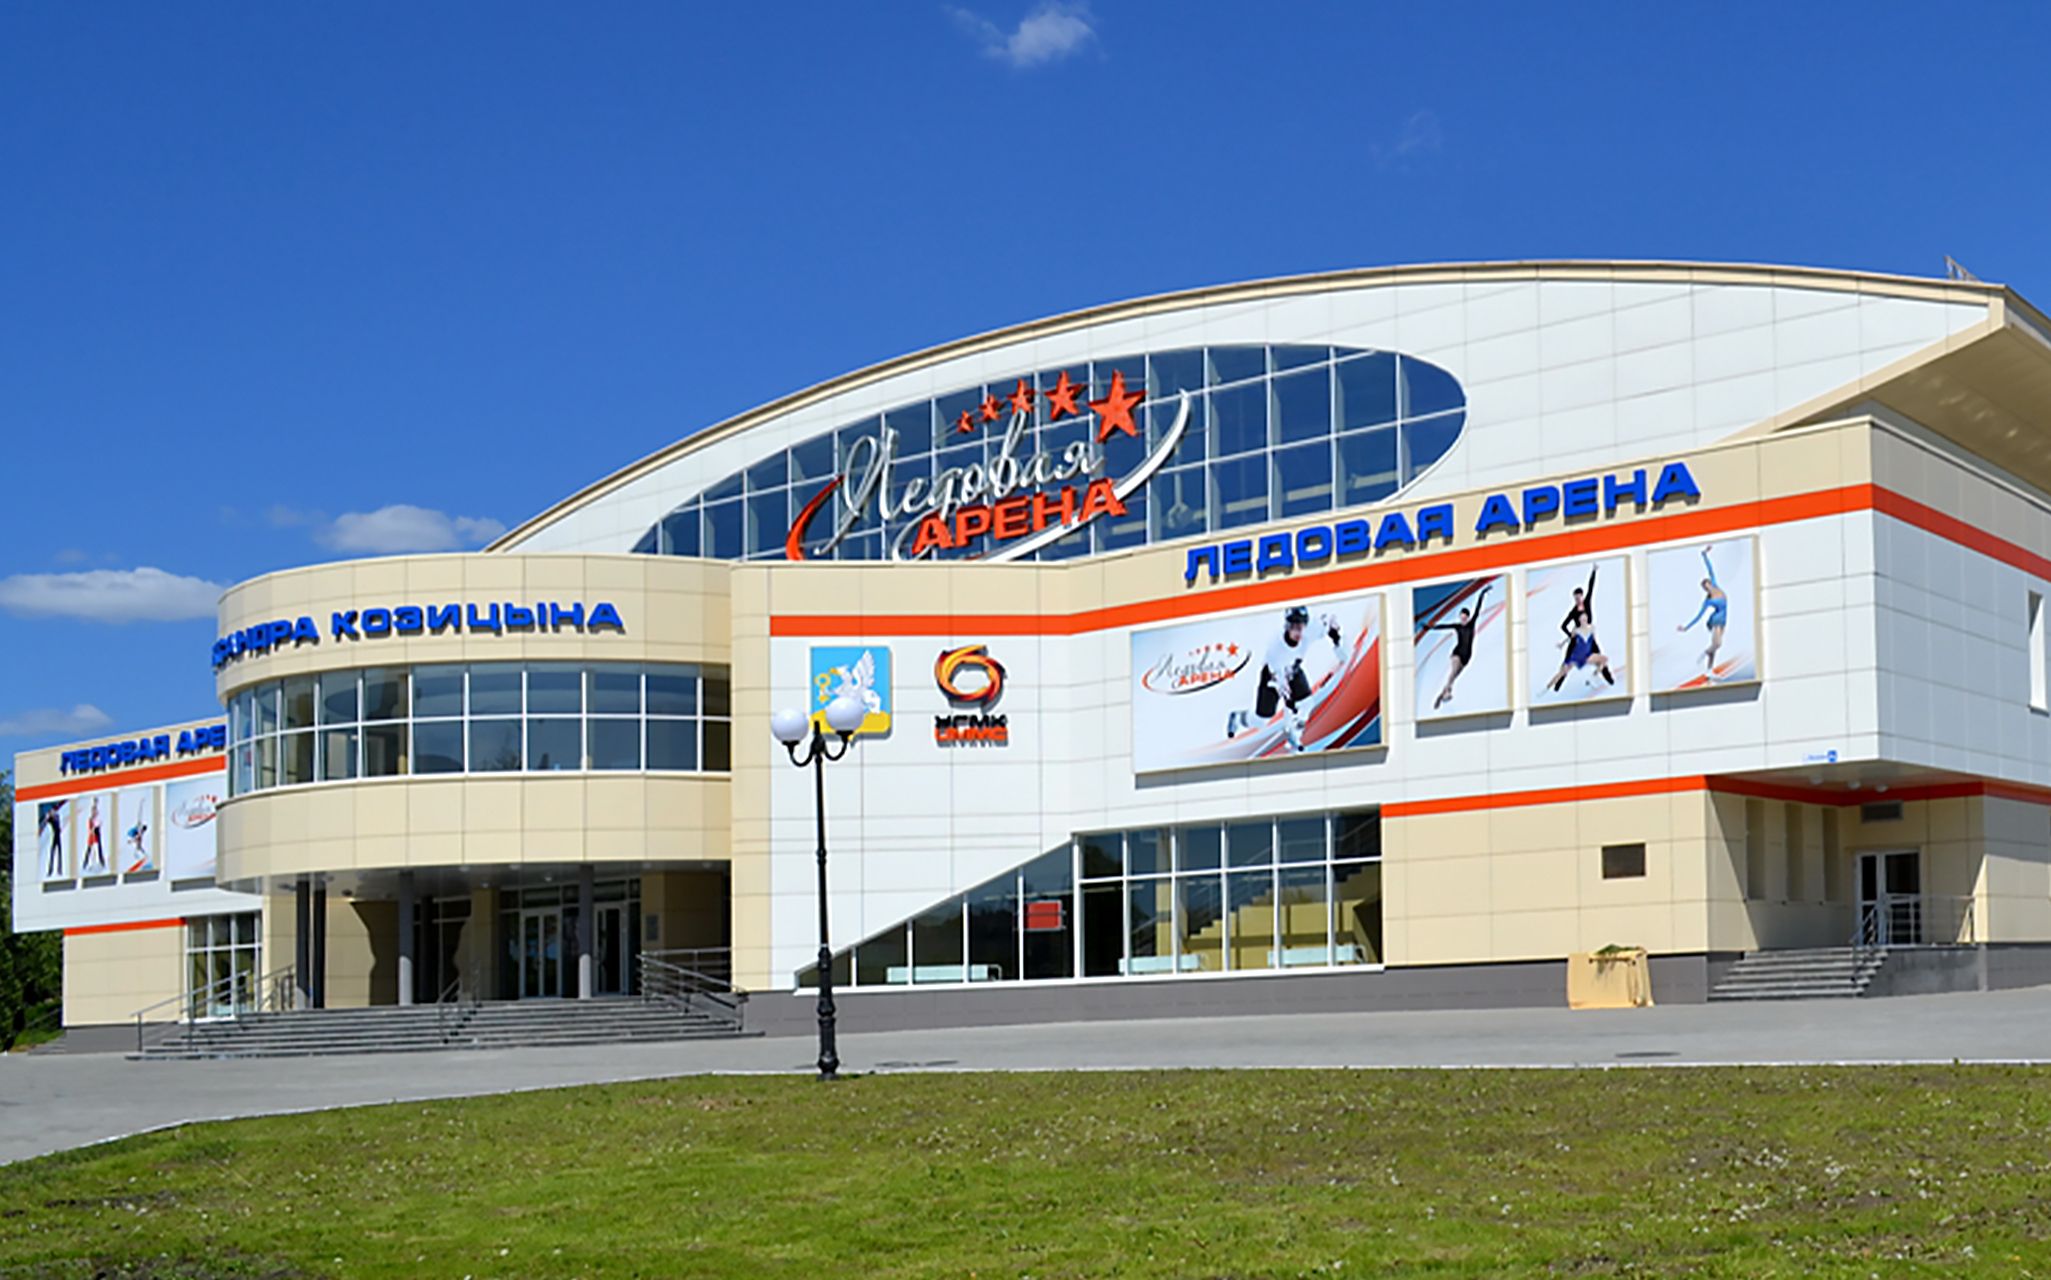 Кировград ледовый дворец